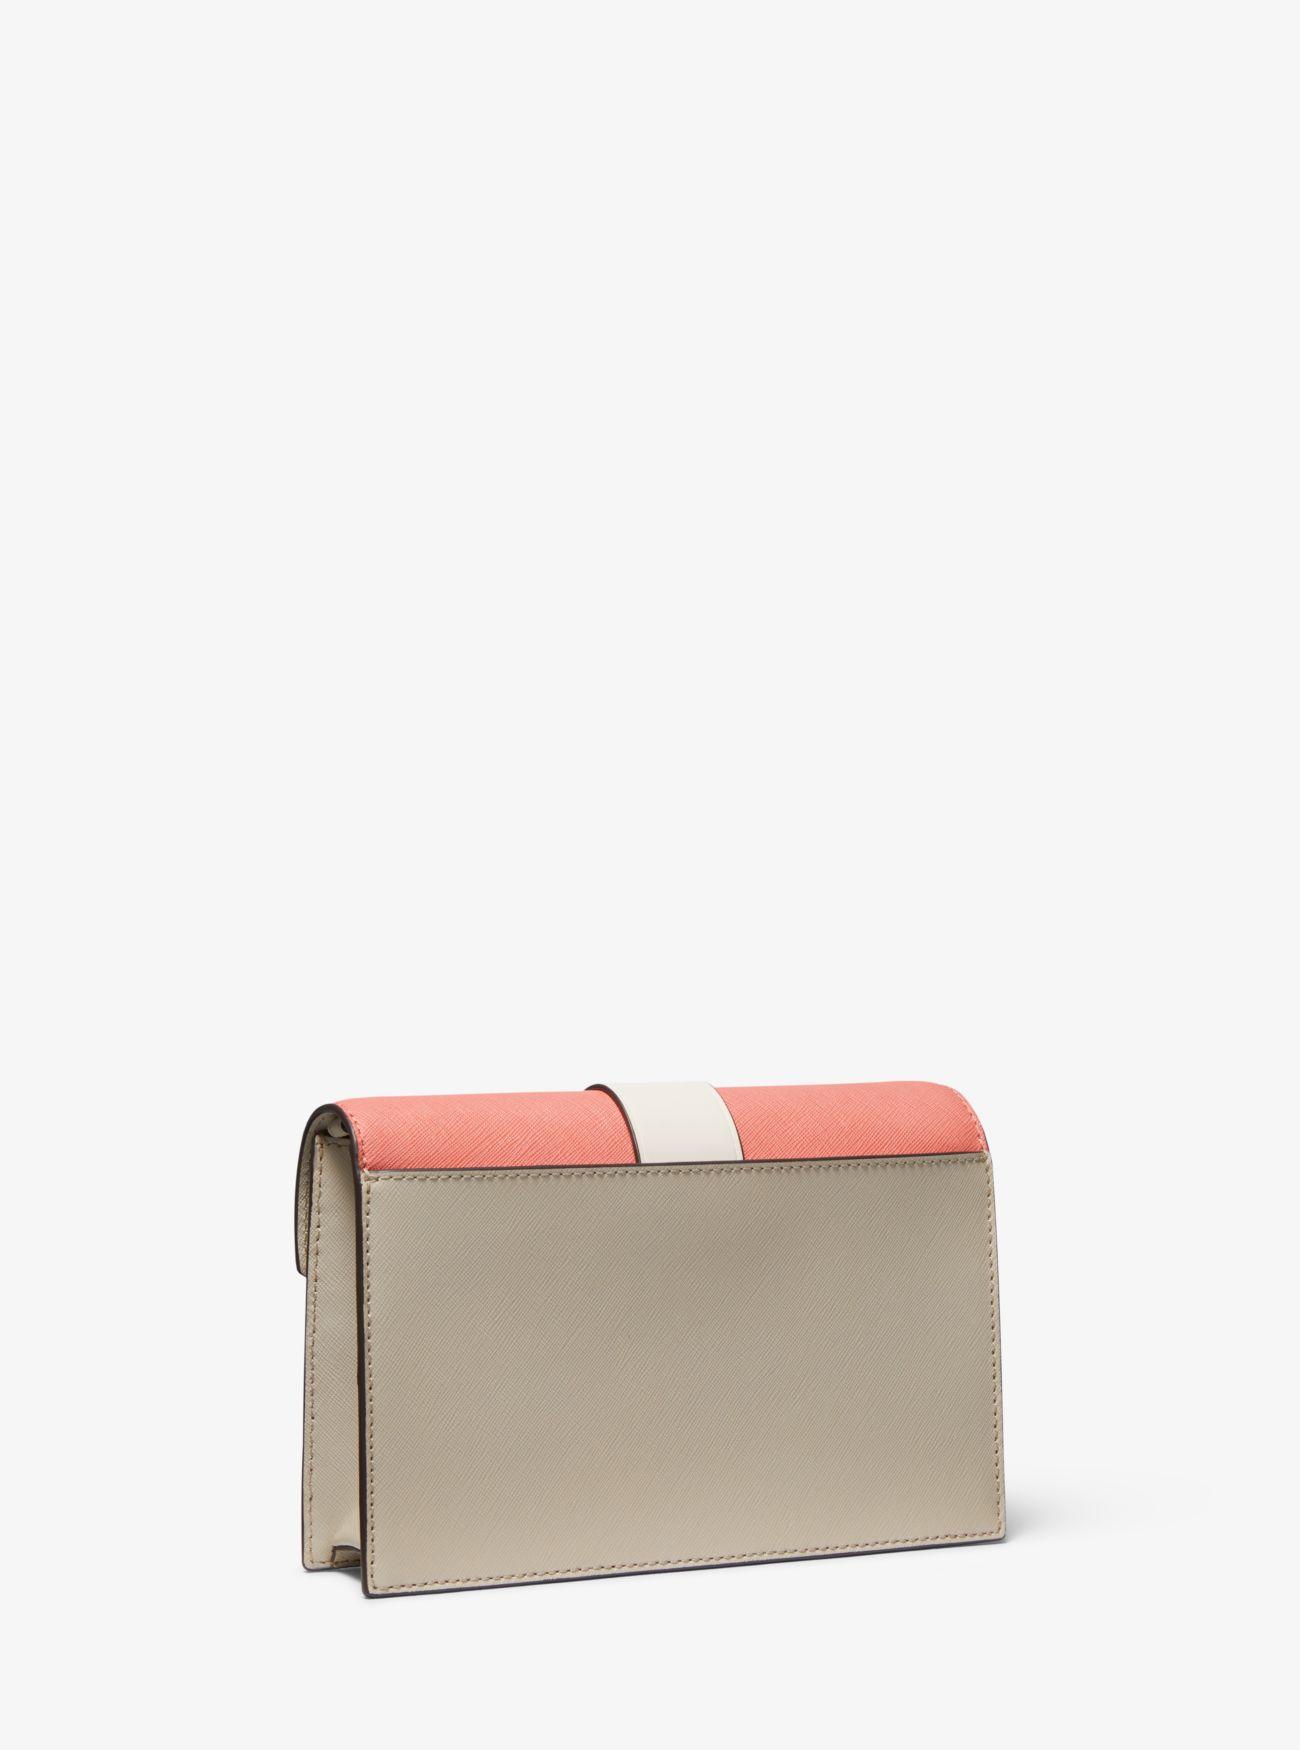 Michael Kors Medium Color-block Leather Crossbody Bag in Pink | Lyst